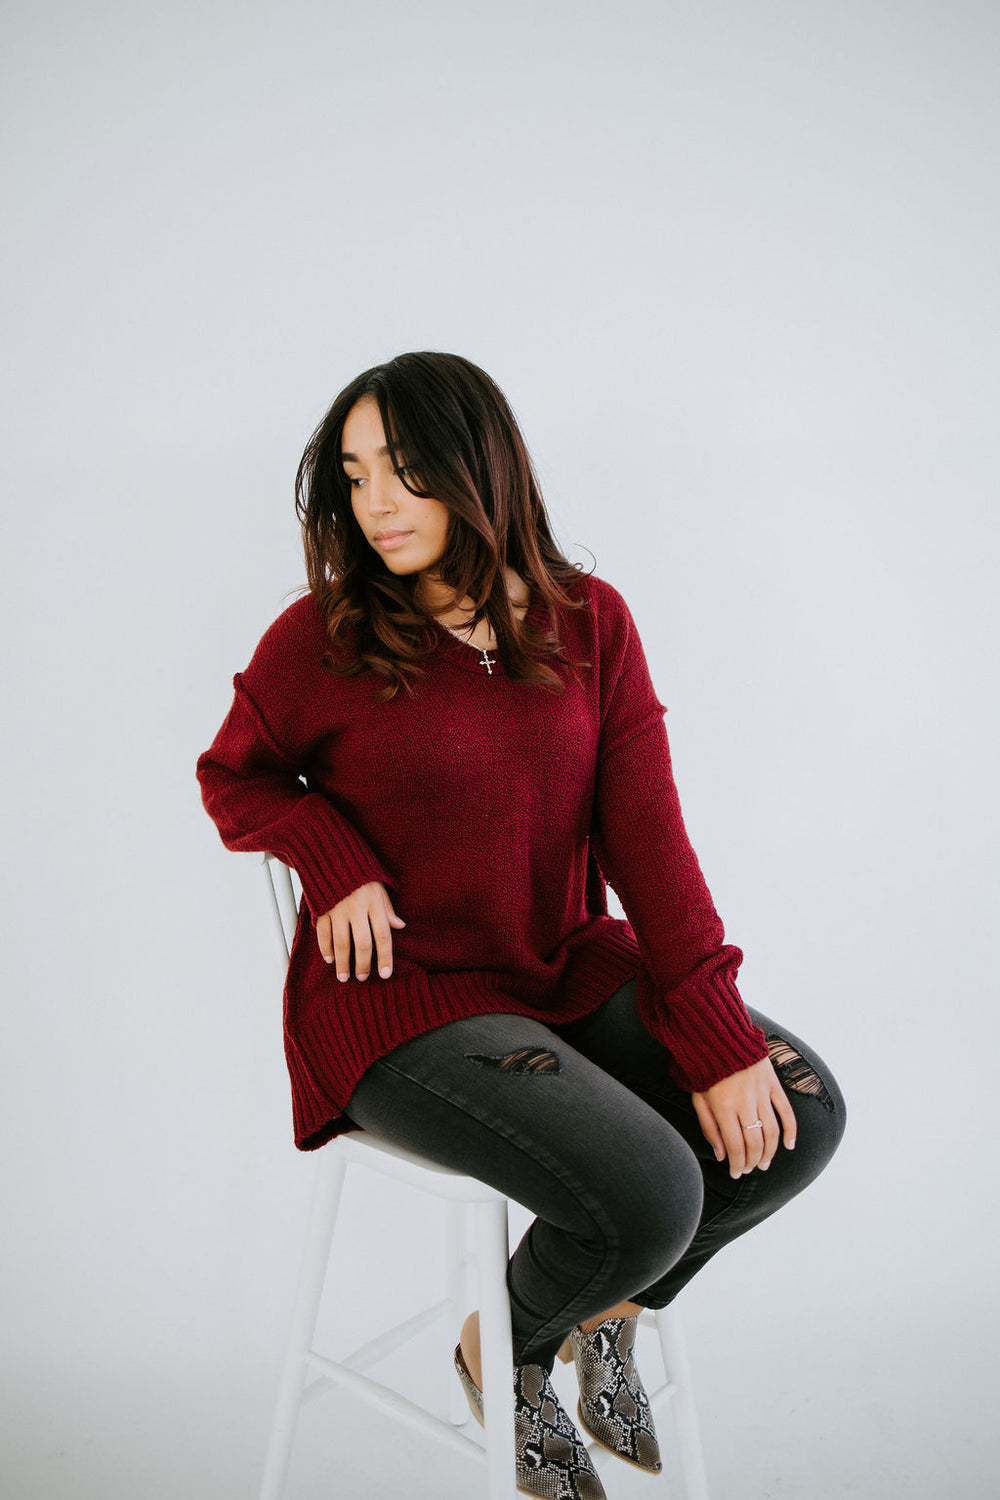 Rae Chunky Sweater by Chelsea DeBoer